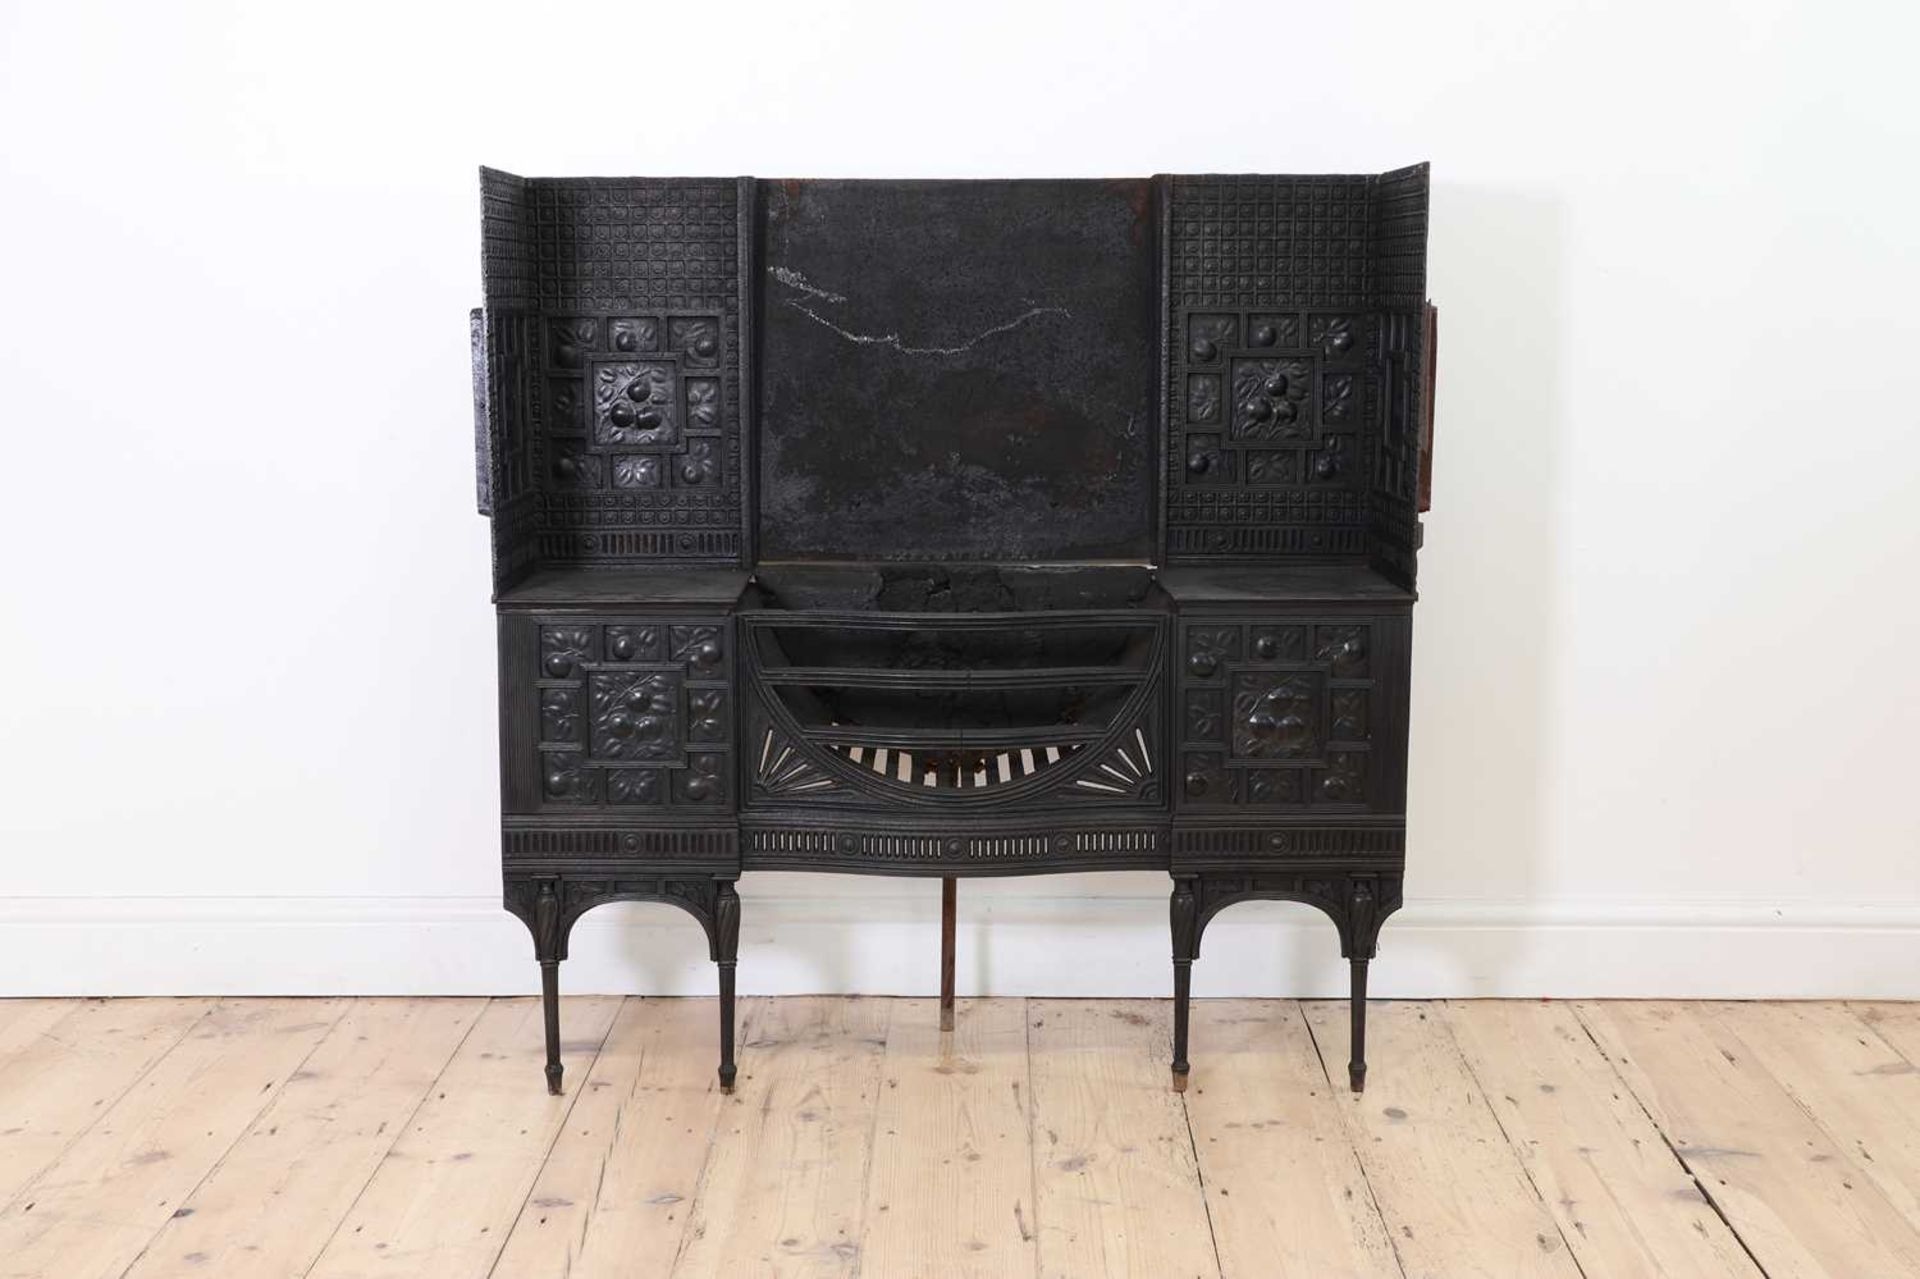 An Aesthetic Coalbrookdale cast iron fireplace,